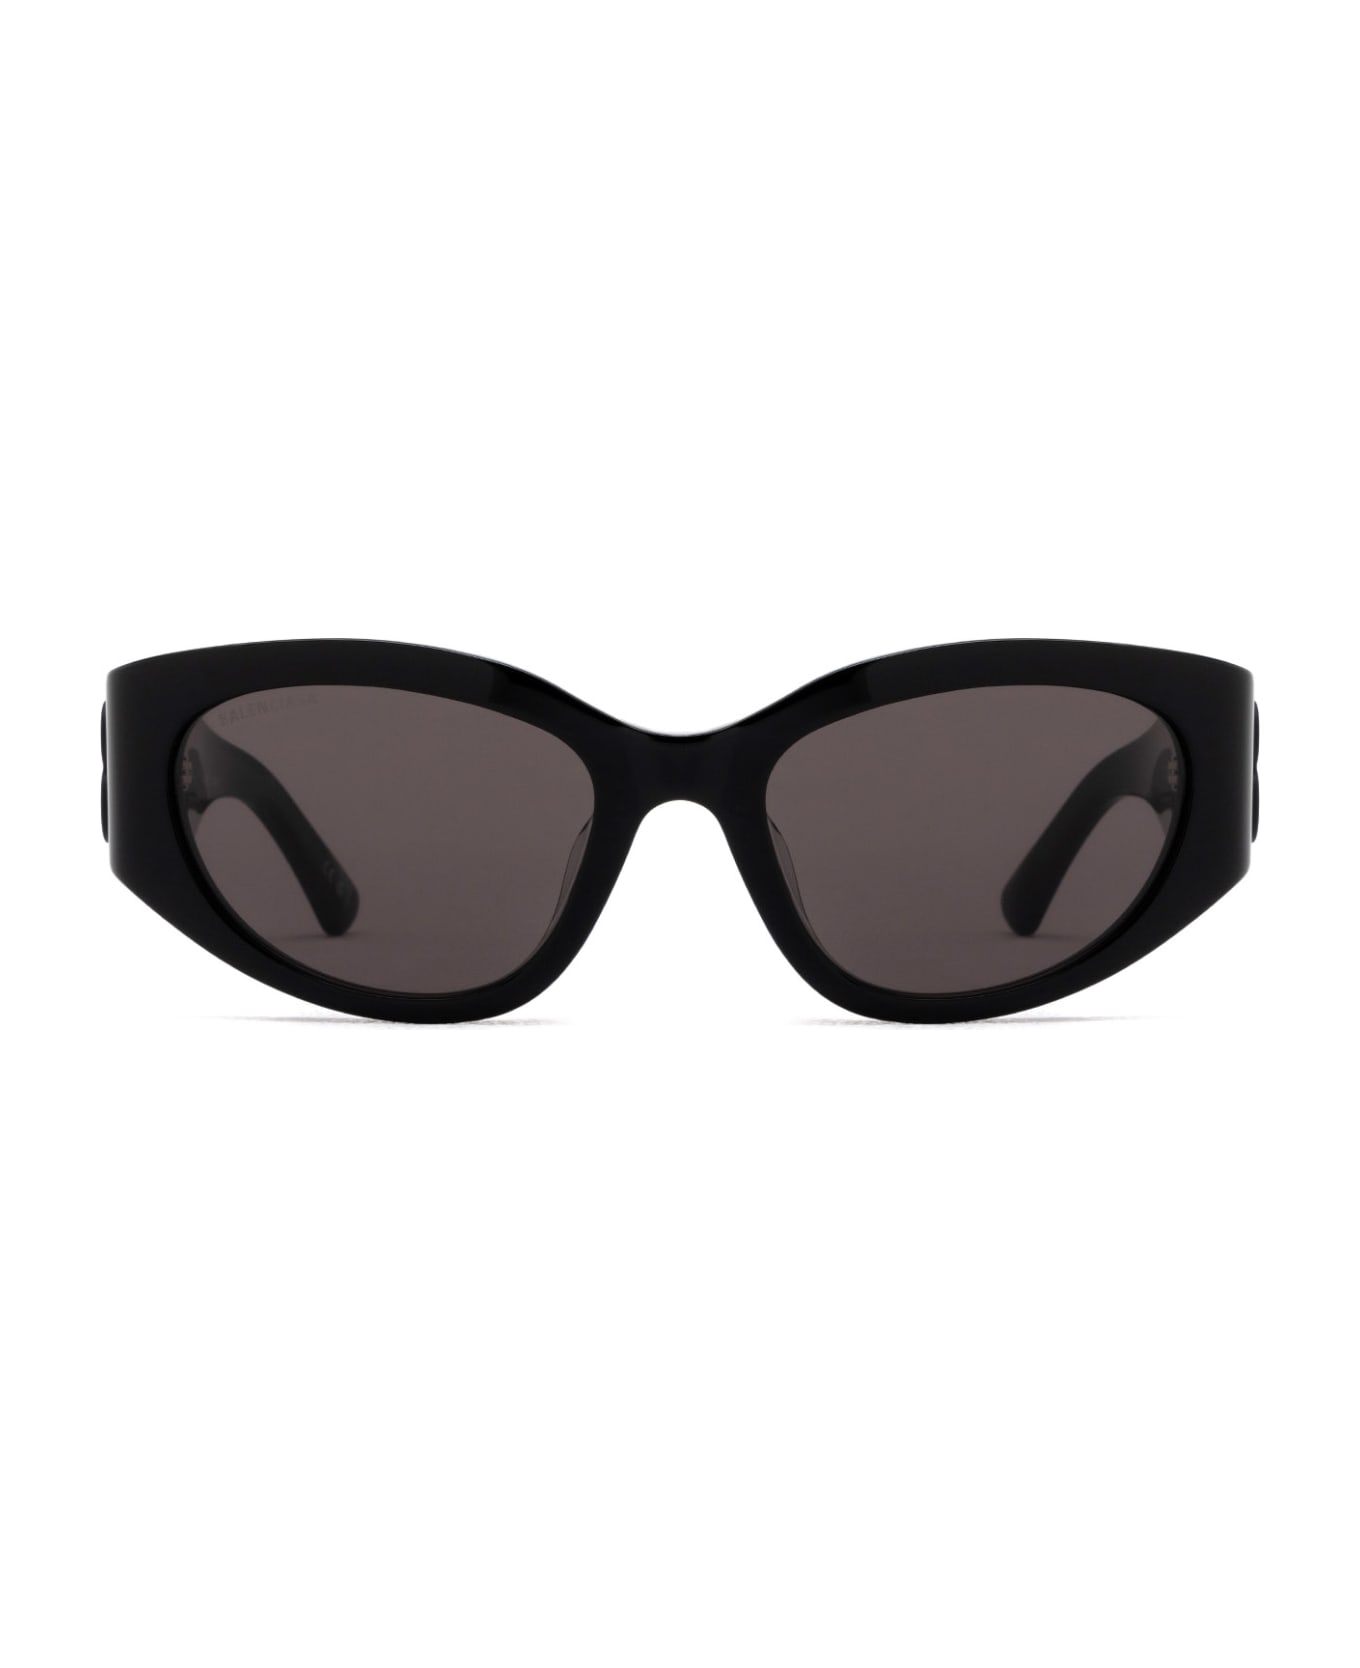 Balenciaga Eyewear Bb0324sk Black Sunglasses - Black